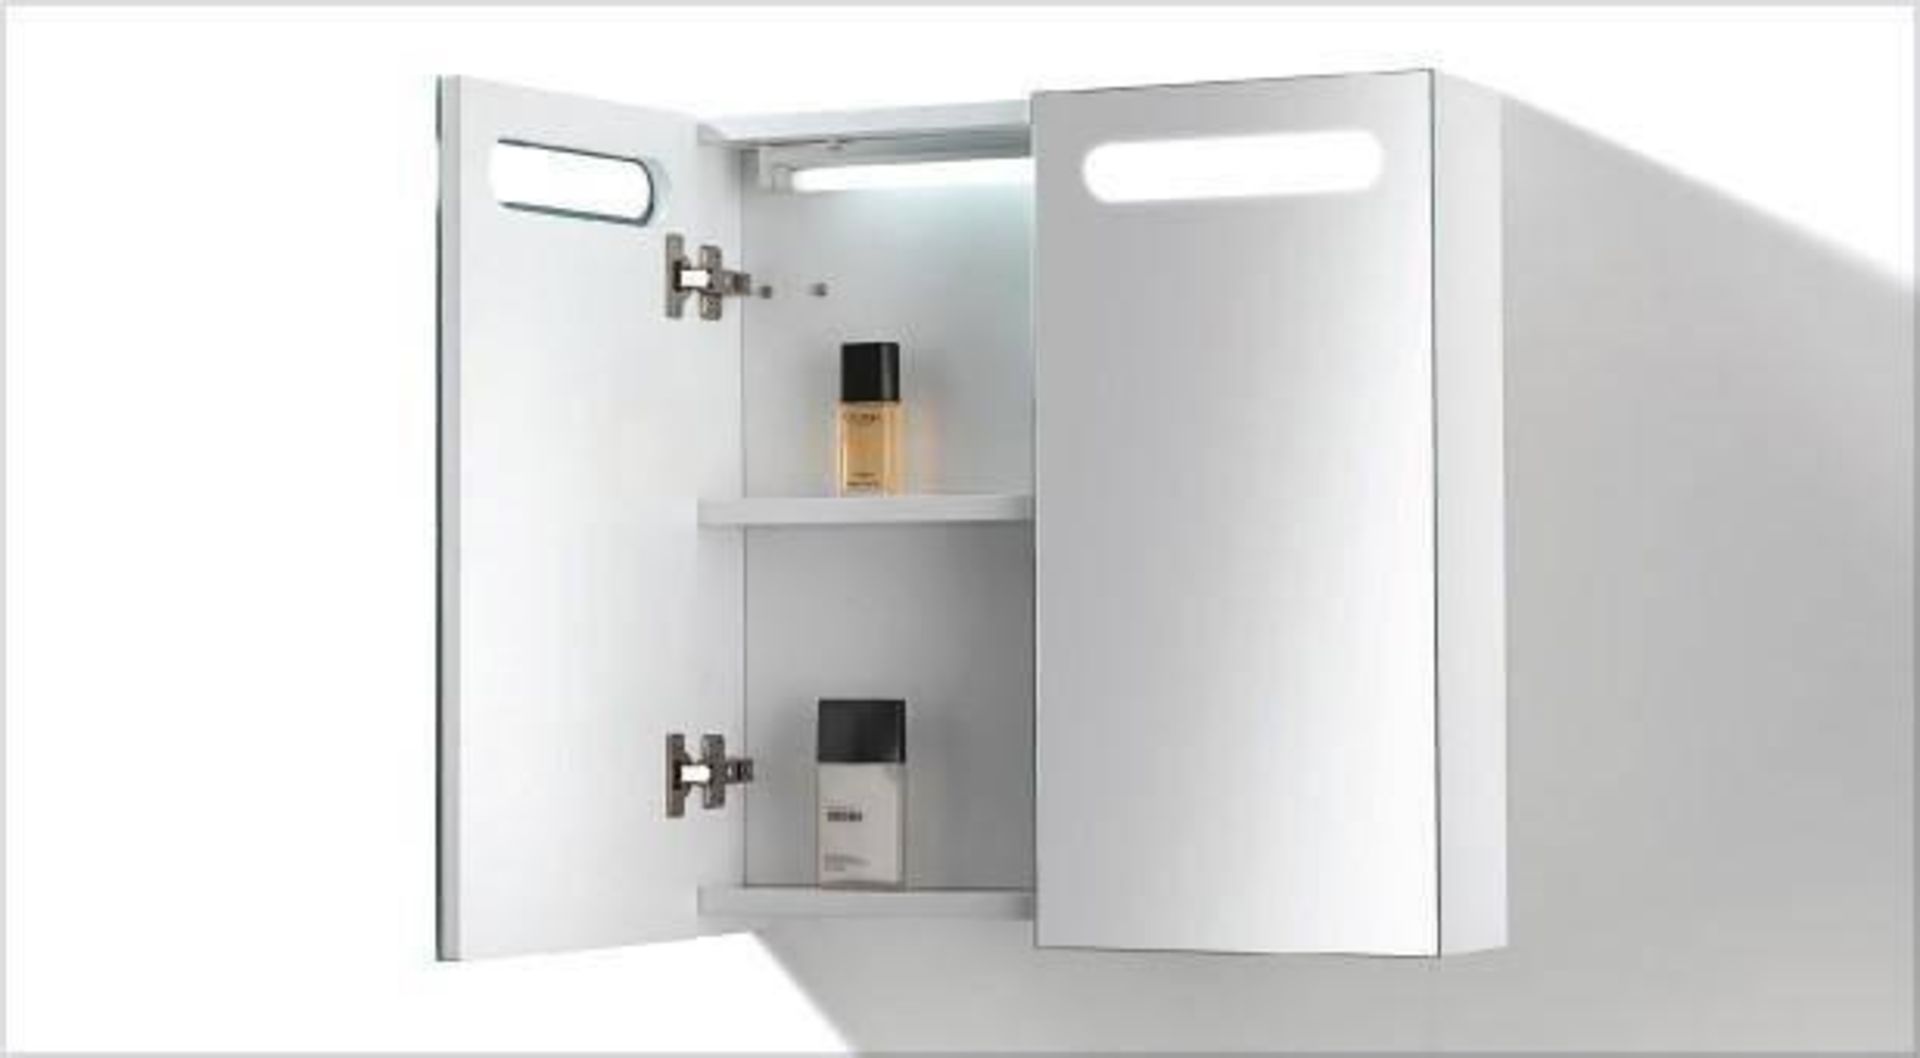 1 x Contemporary Bathroom Eden Mirror Cabinet 80 - A-Grade - Ref:AMC12-080 - CL170 - Location: Notti